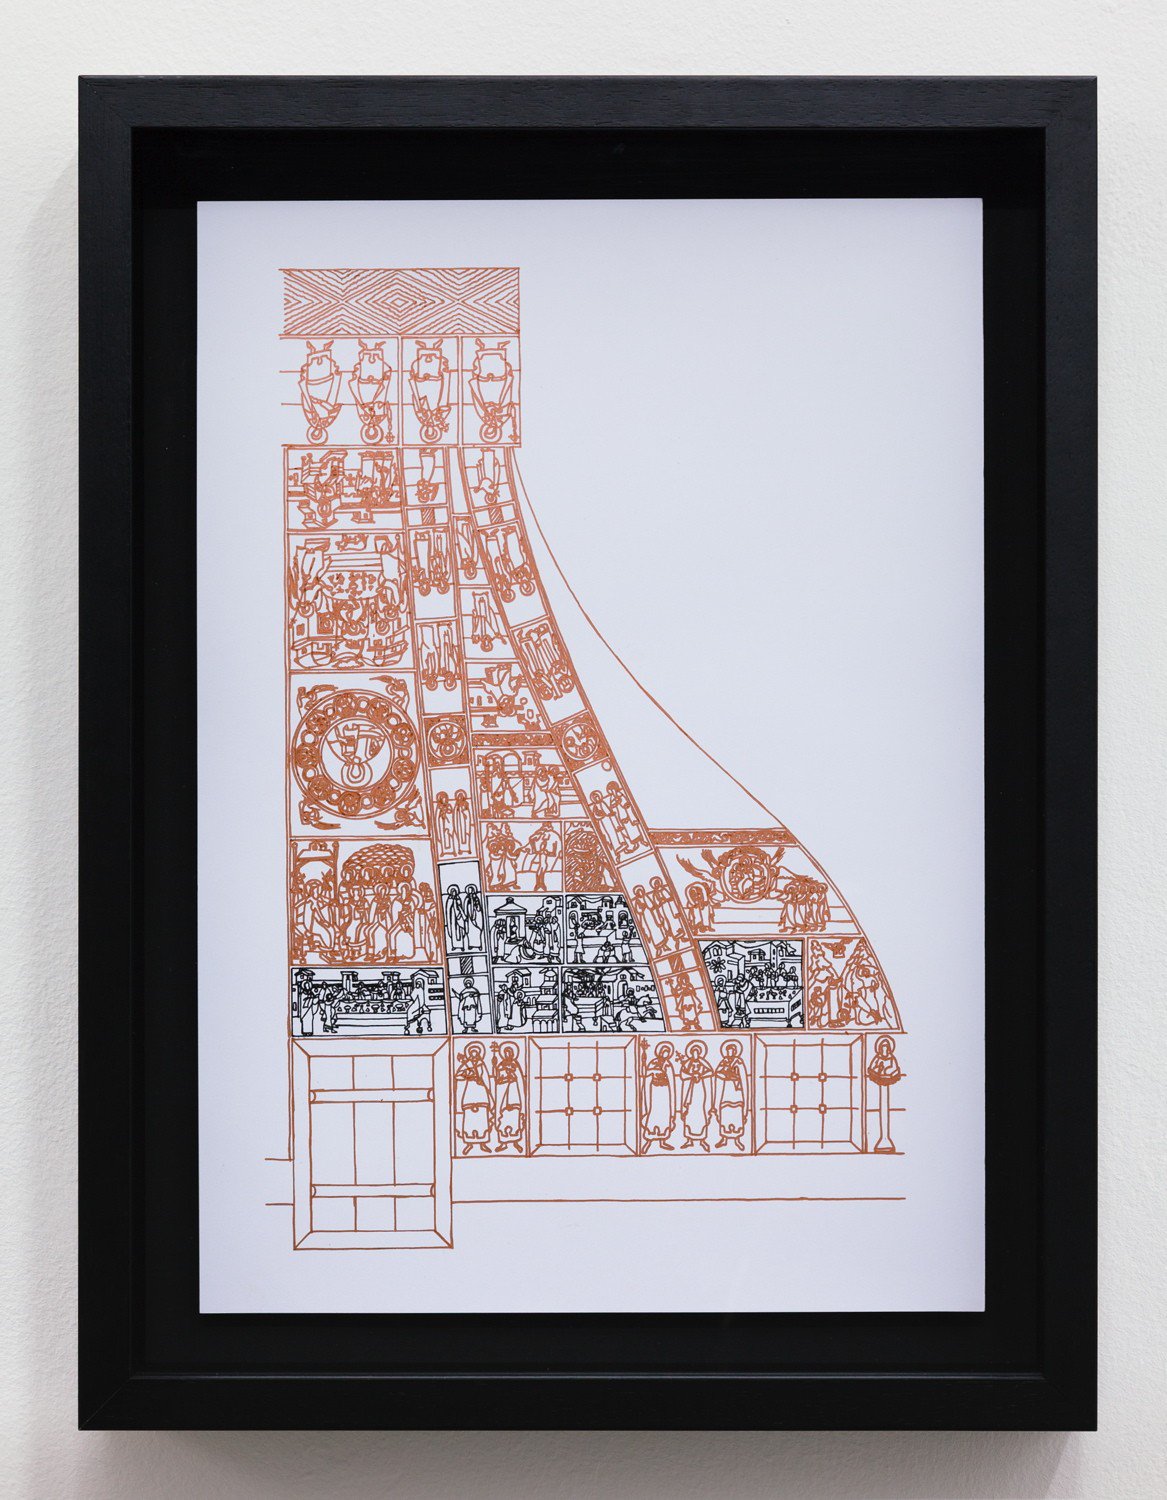 Plamen DejanoffUntitled (Gate Study Arbanassi), 2013Pencil, Indian ink and copper on paper41 x 28 cm